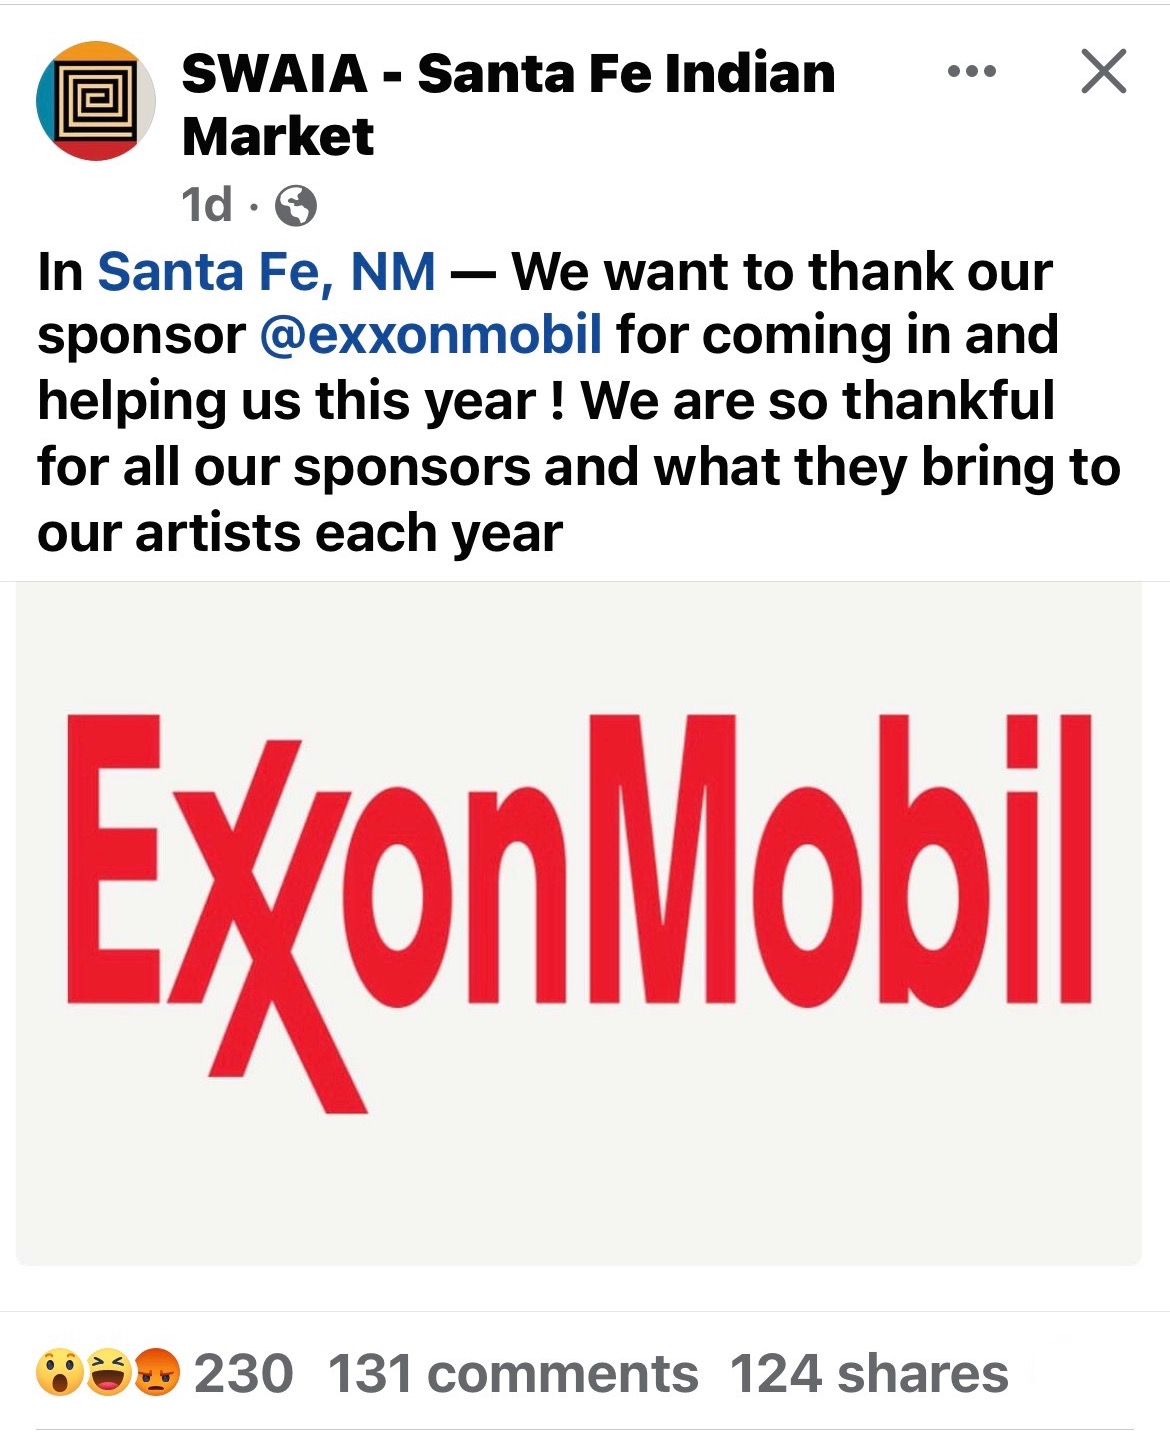 ExxonMobil and SWAIA